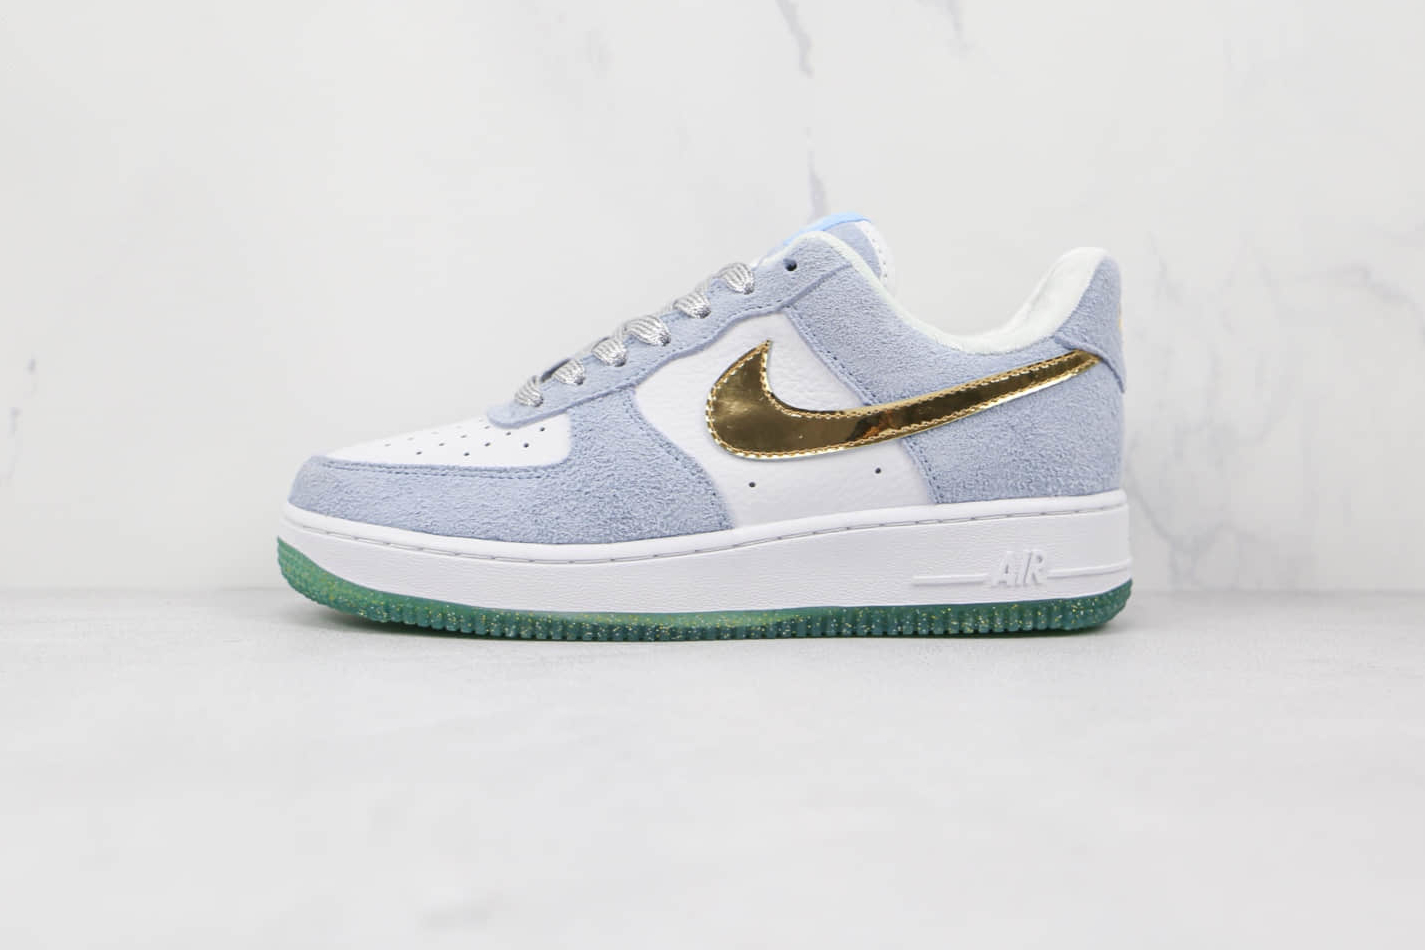 Nike Air Force 1 07 Low Grey Green Metallic Gold CW1577-001 - Stylish Sneaker for Men